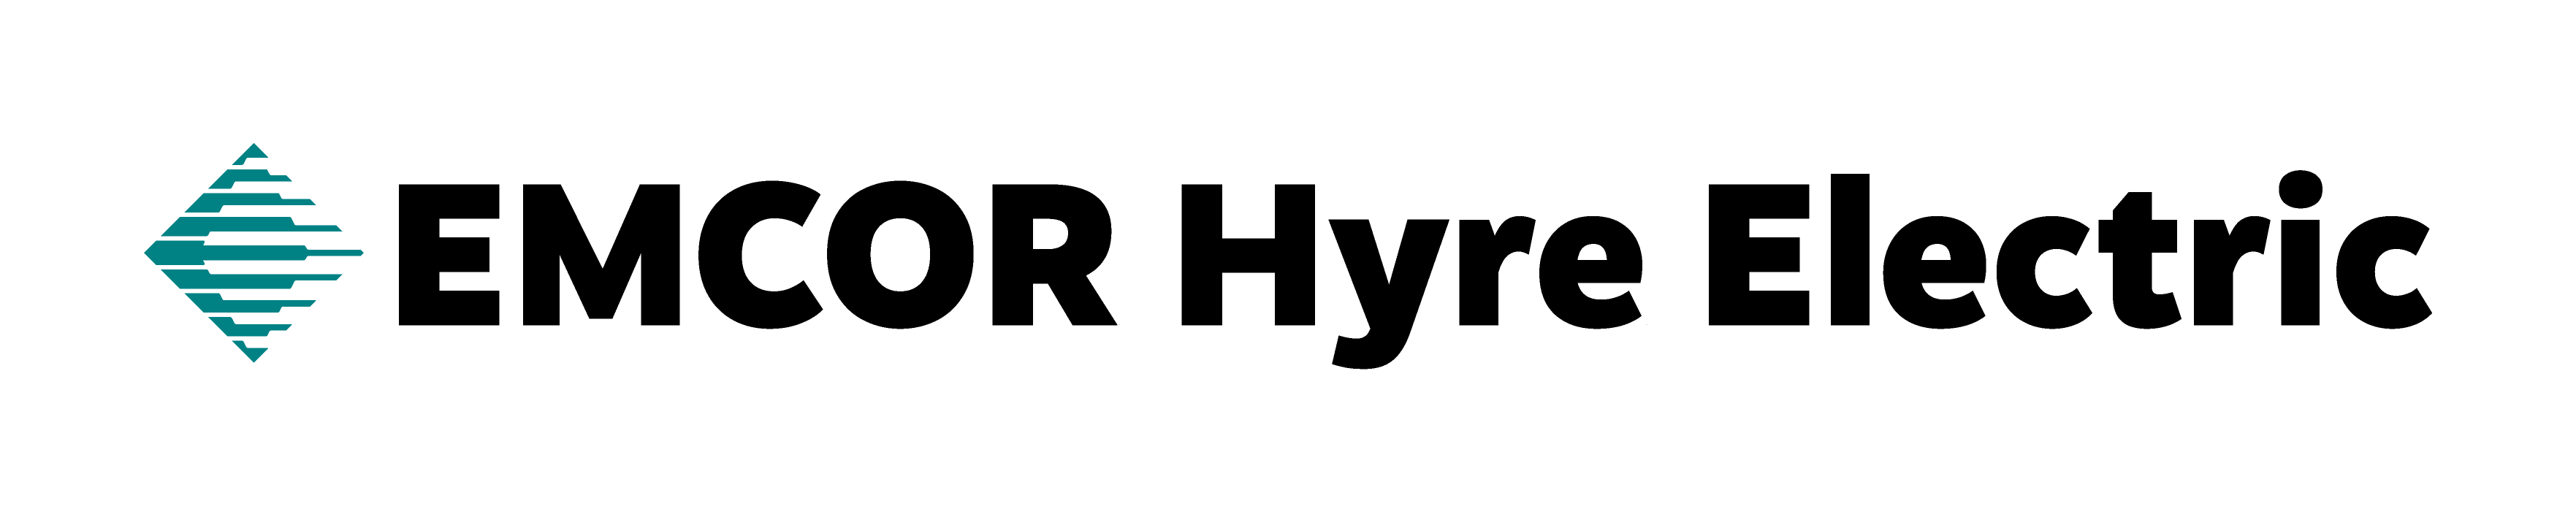 EMCOR Hyre Electric logo